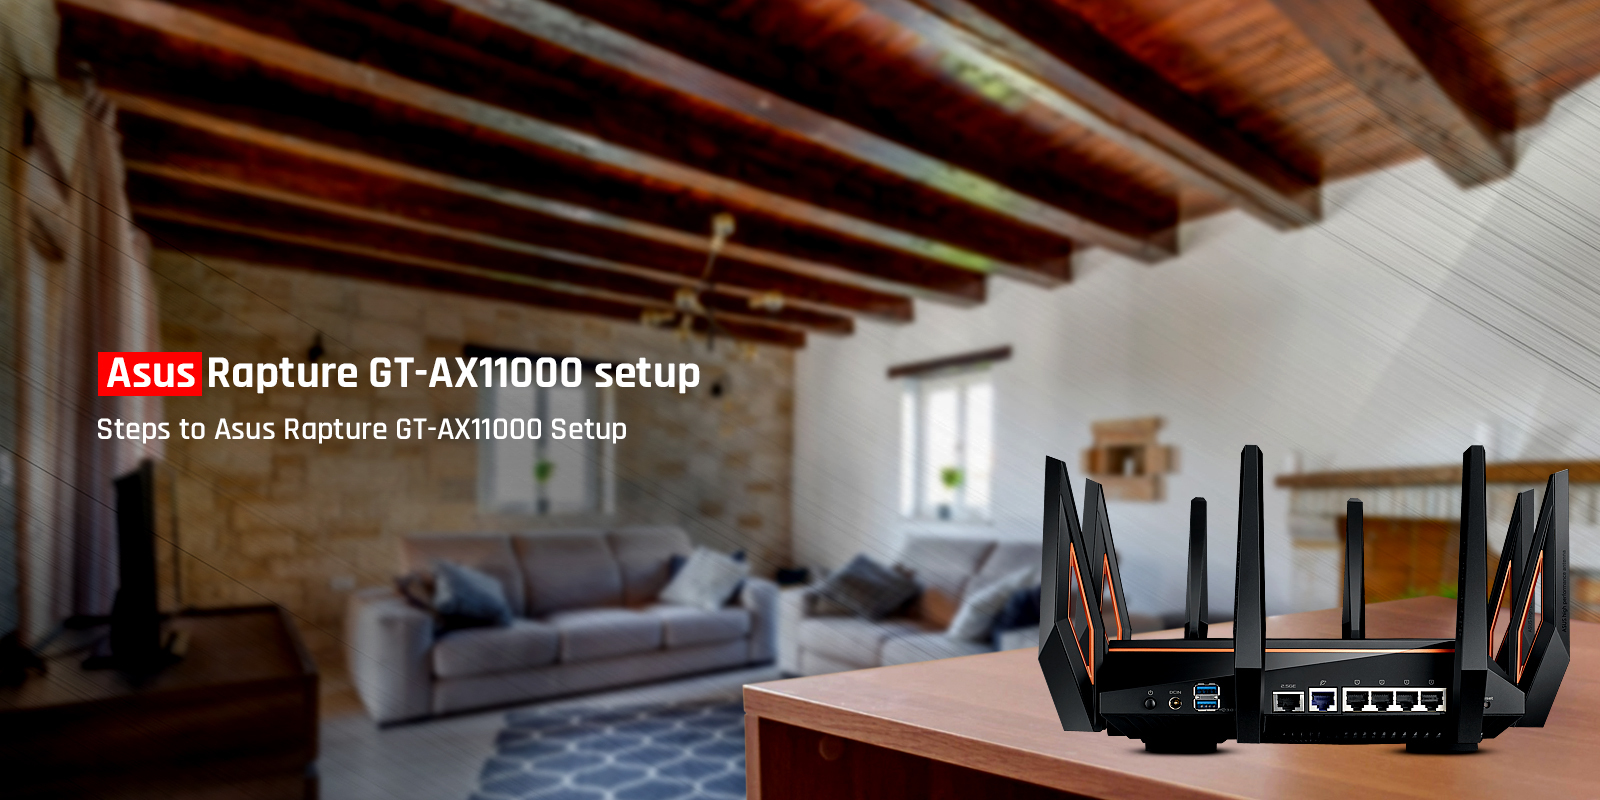 Asus Rapture GT-AX11000 setup